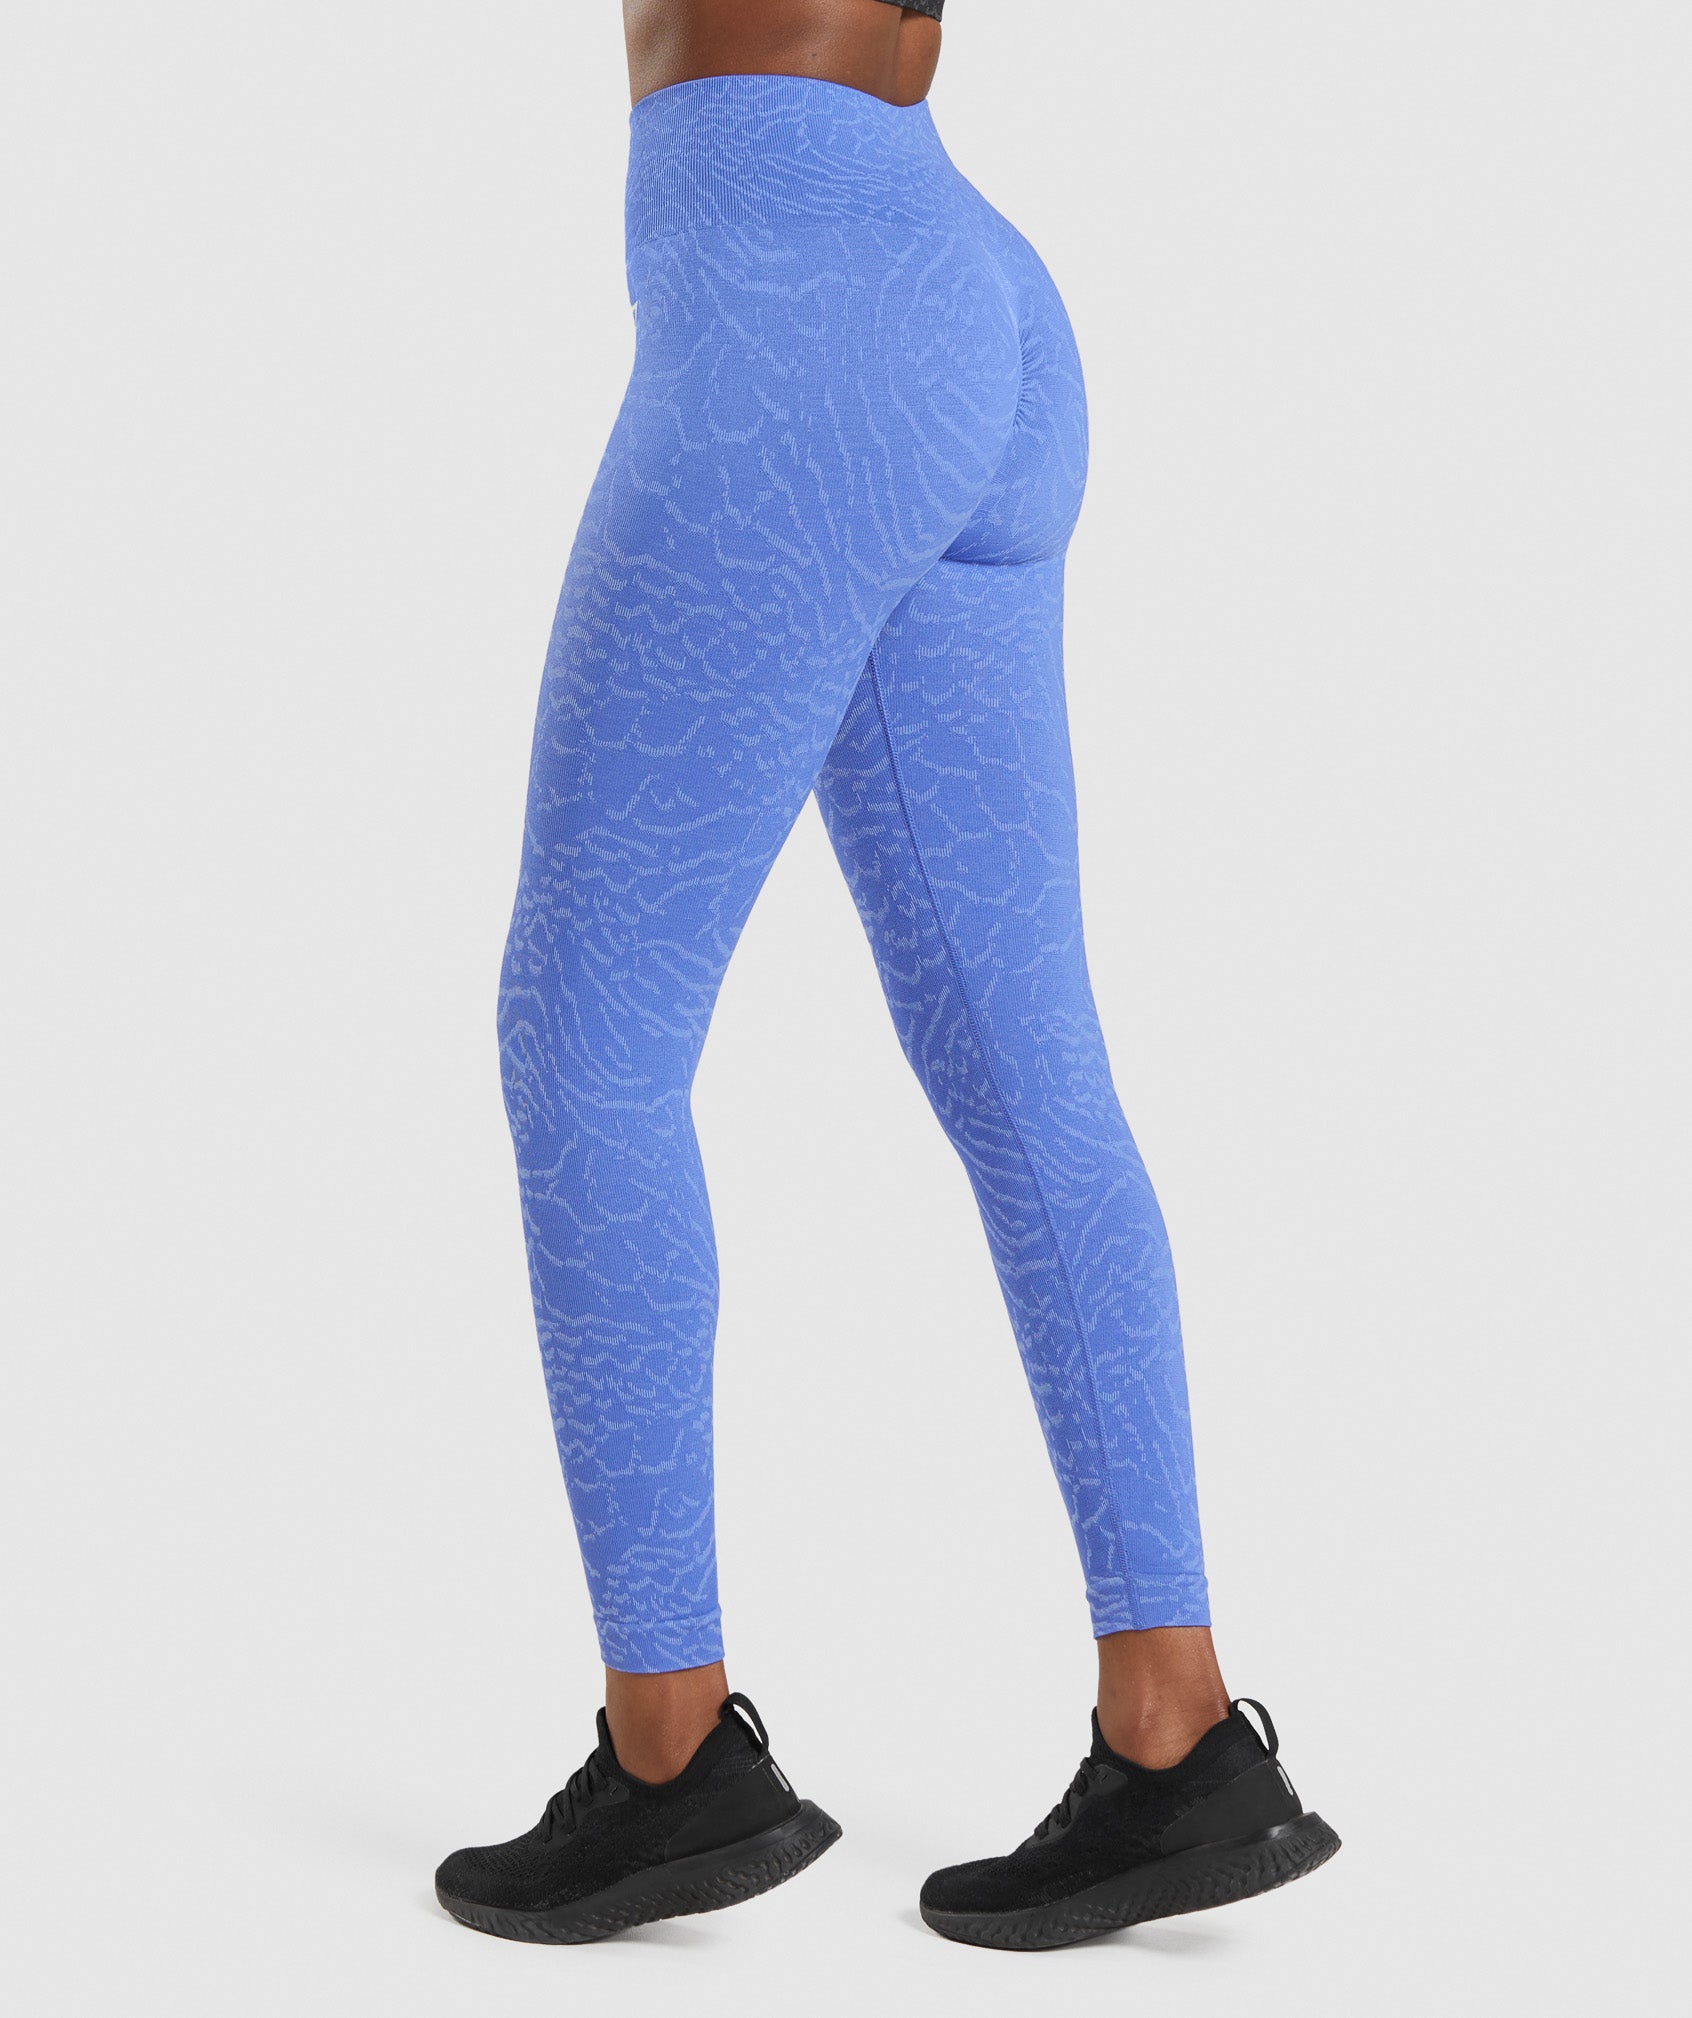 LEGGINGS - Women's Gymshark Adapt Seamless Powder Blue Marl Leggings. Size  XS